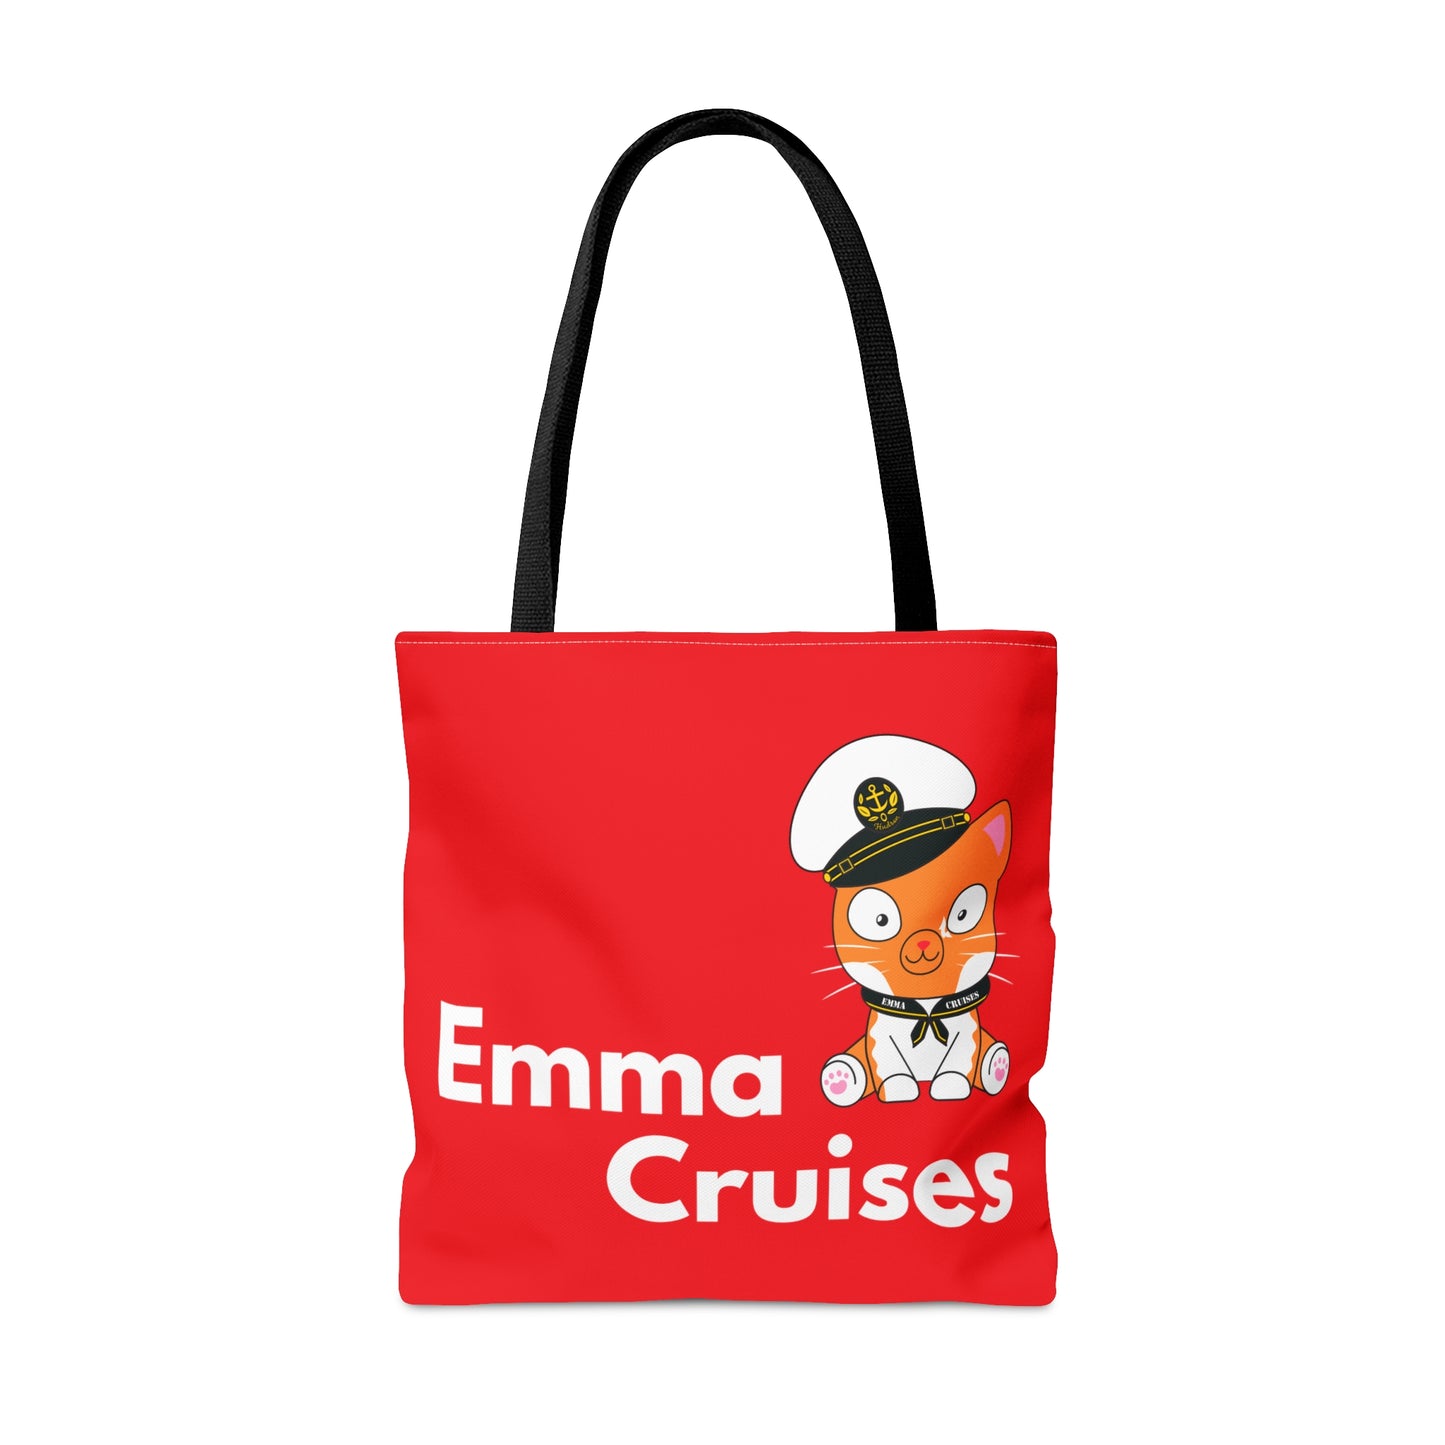 Emma Cruises - Tasche